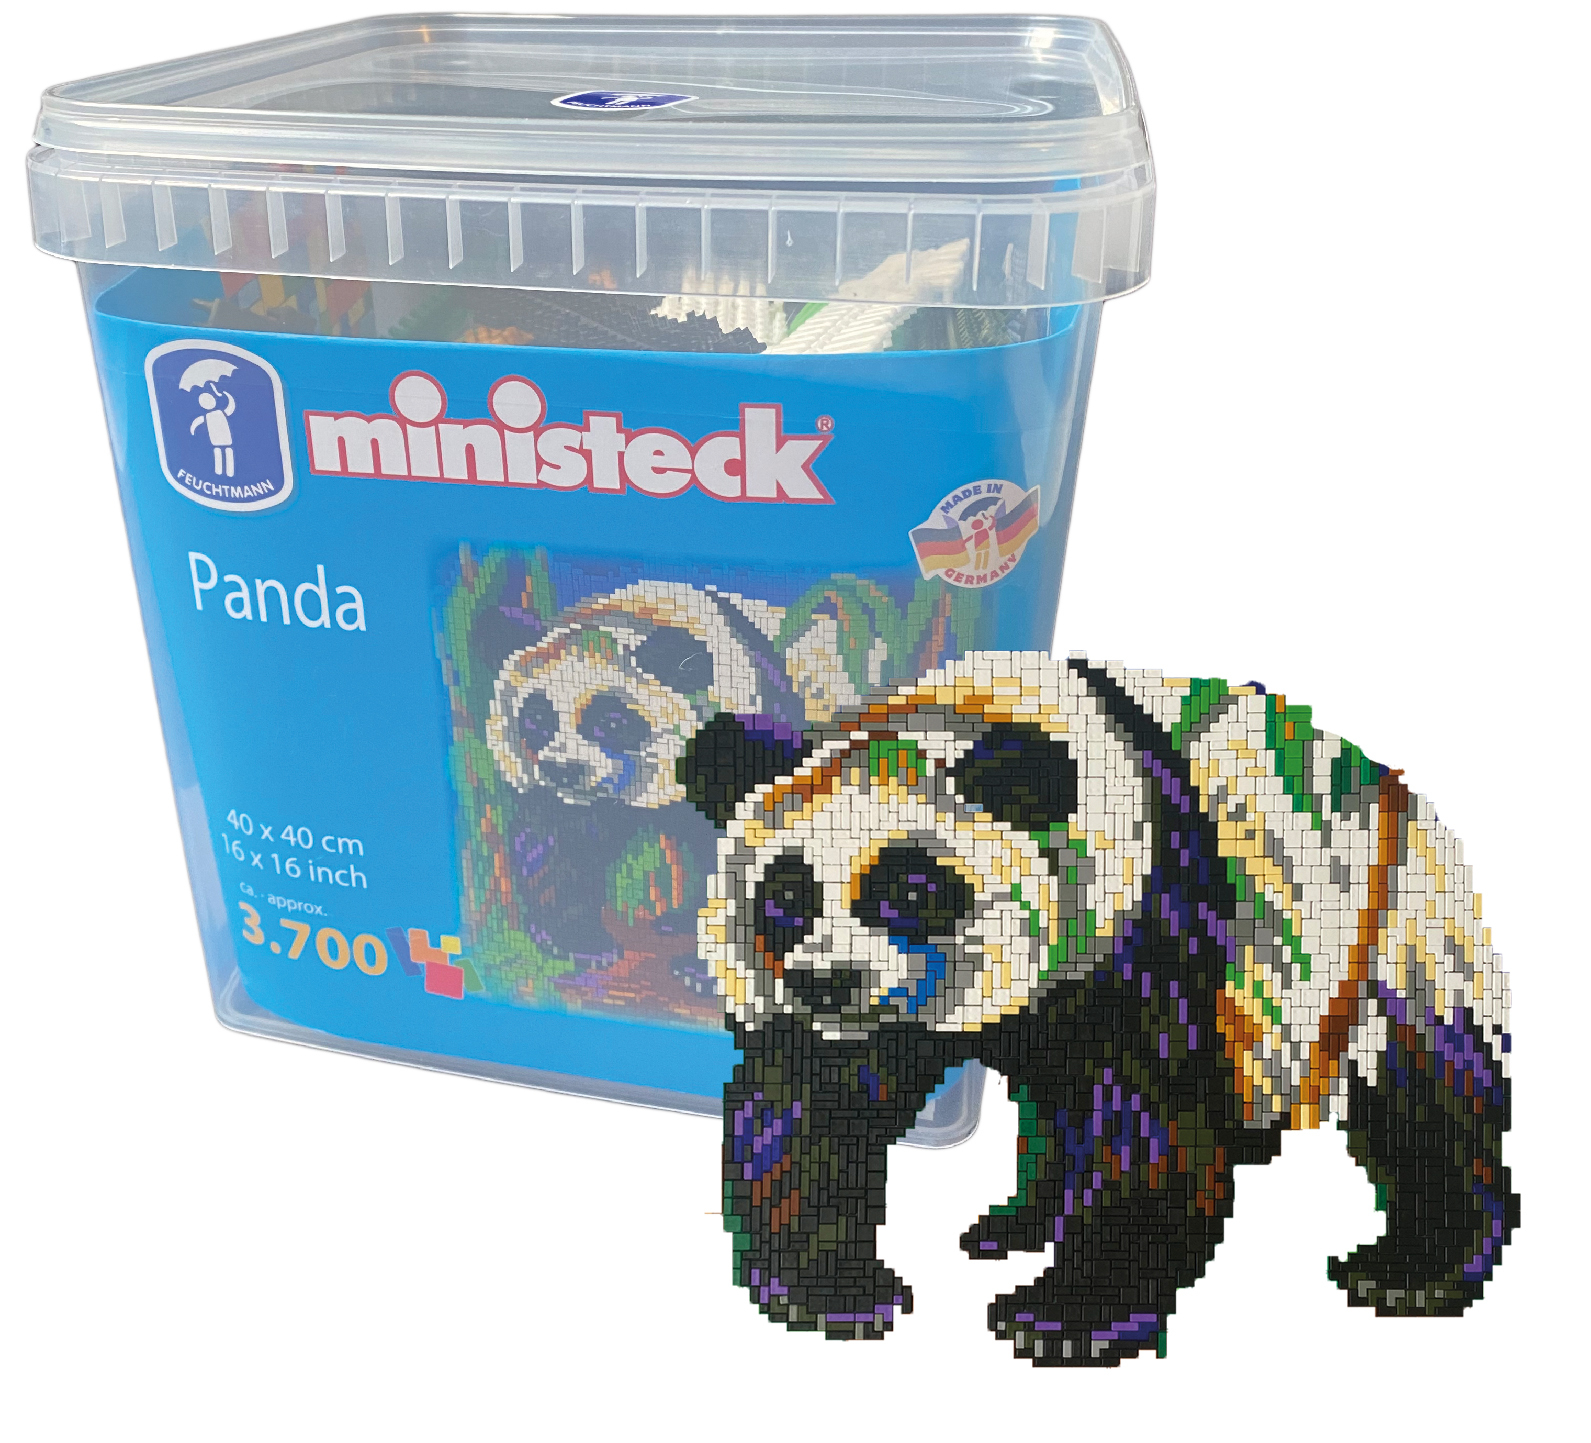 ministeck Panda (big) - XXL Emmer - 3700pcs